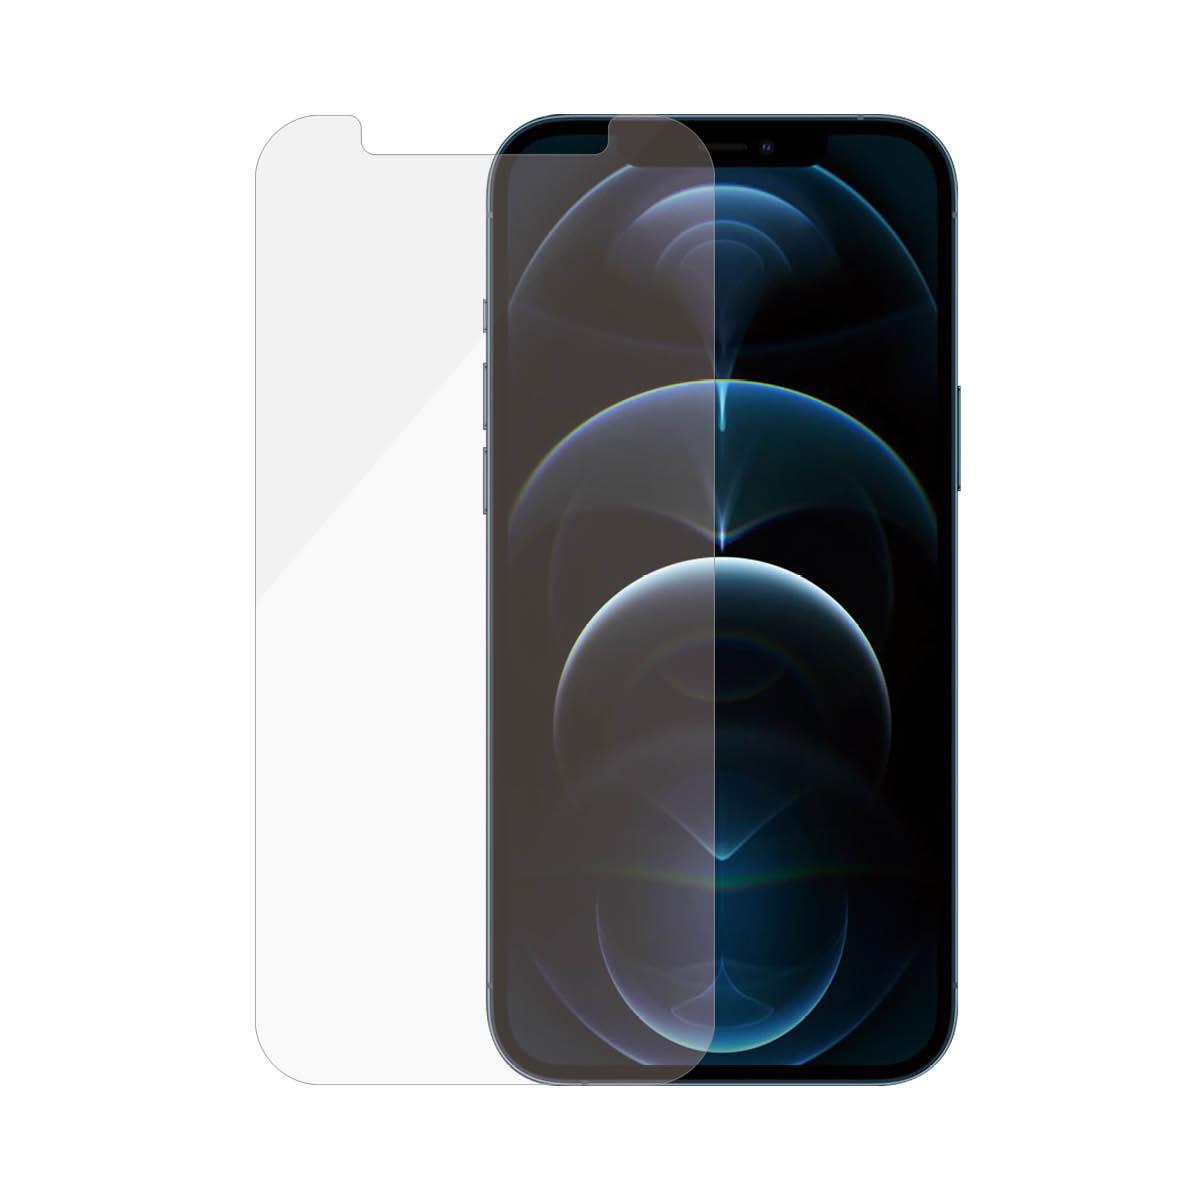 PanzerGlass  ® Displayschutzglas Apple iPhone 12 Pro Max | Standard Fit 